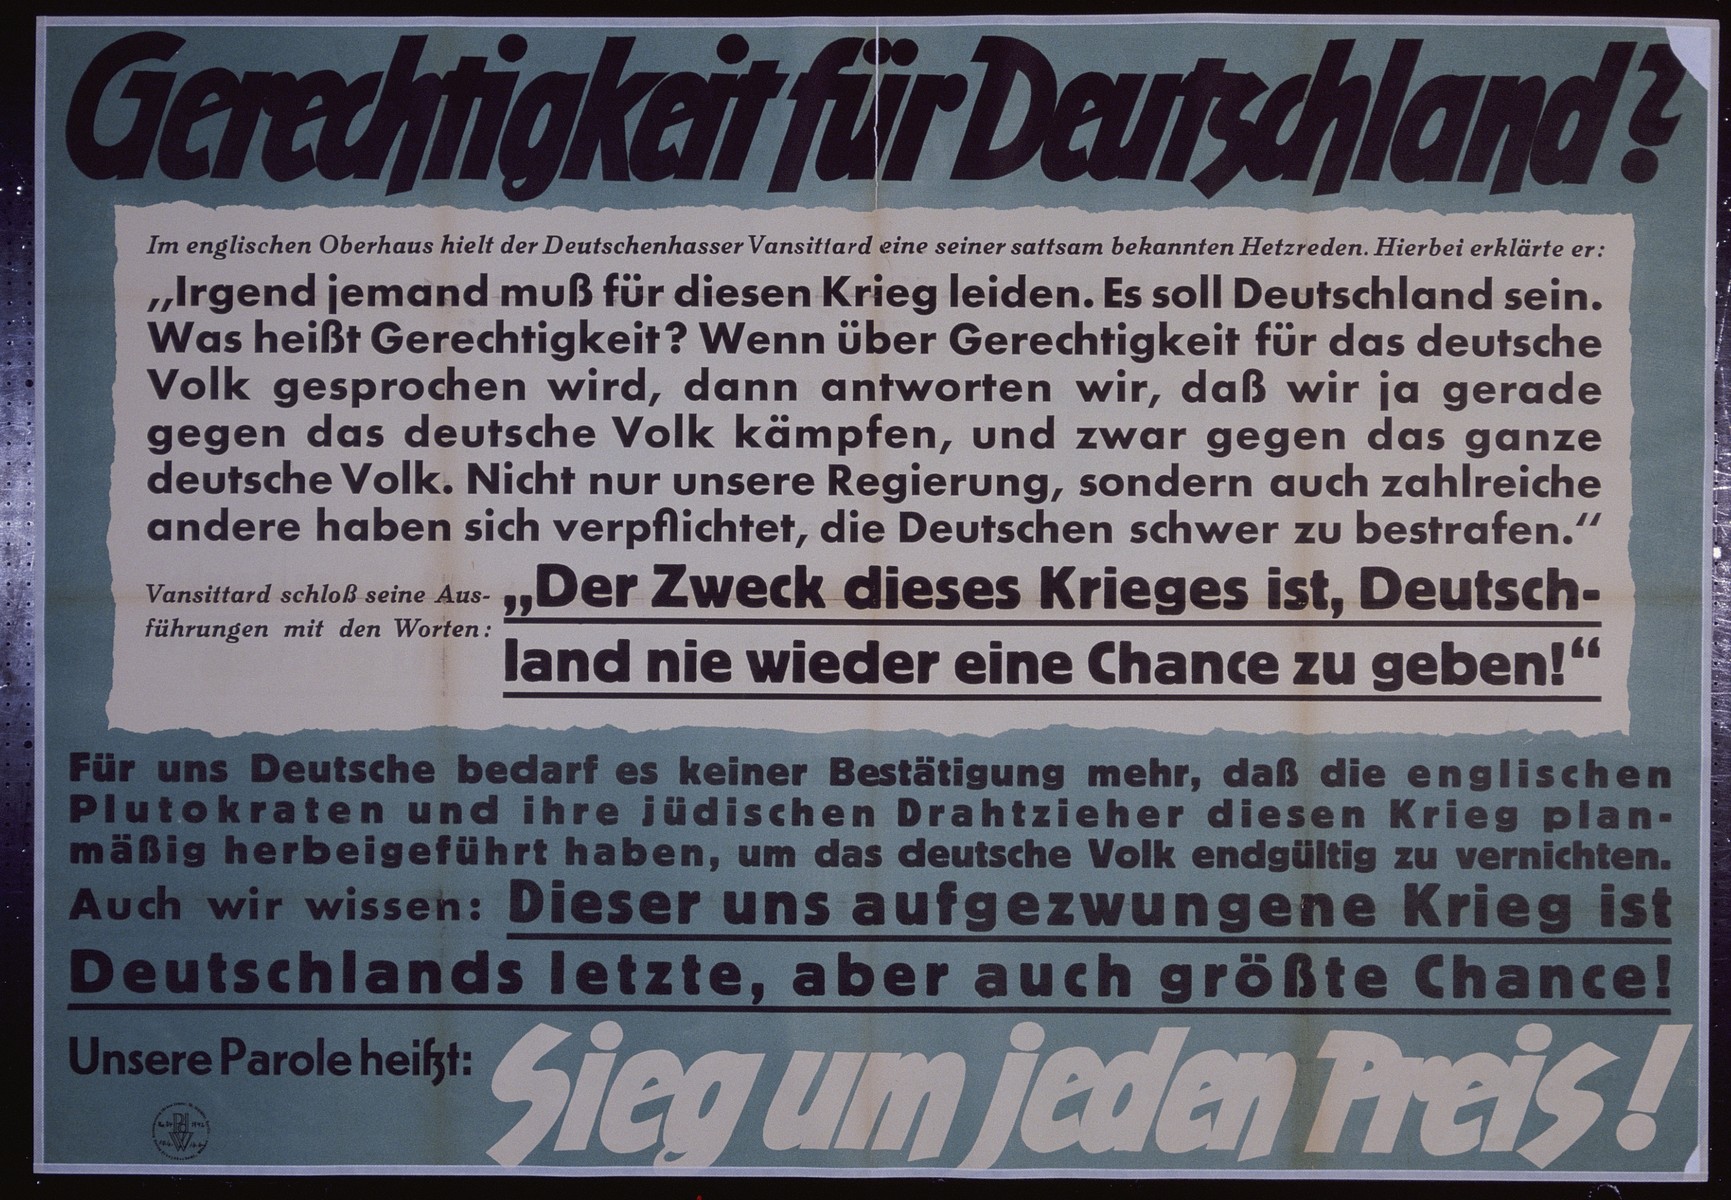 Nazi propaganda poster entitled, "Gerechtigkeit fur Deutschland?"  issued by the "Parole der Woche," a wall newspaper (Wandzeitung) published by the National Socialist Party propaganda office in Munich.